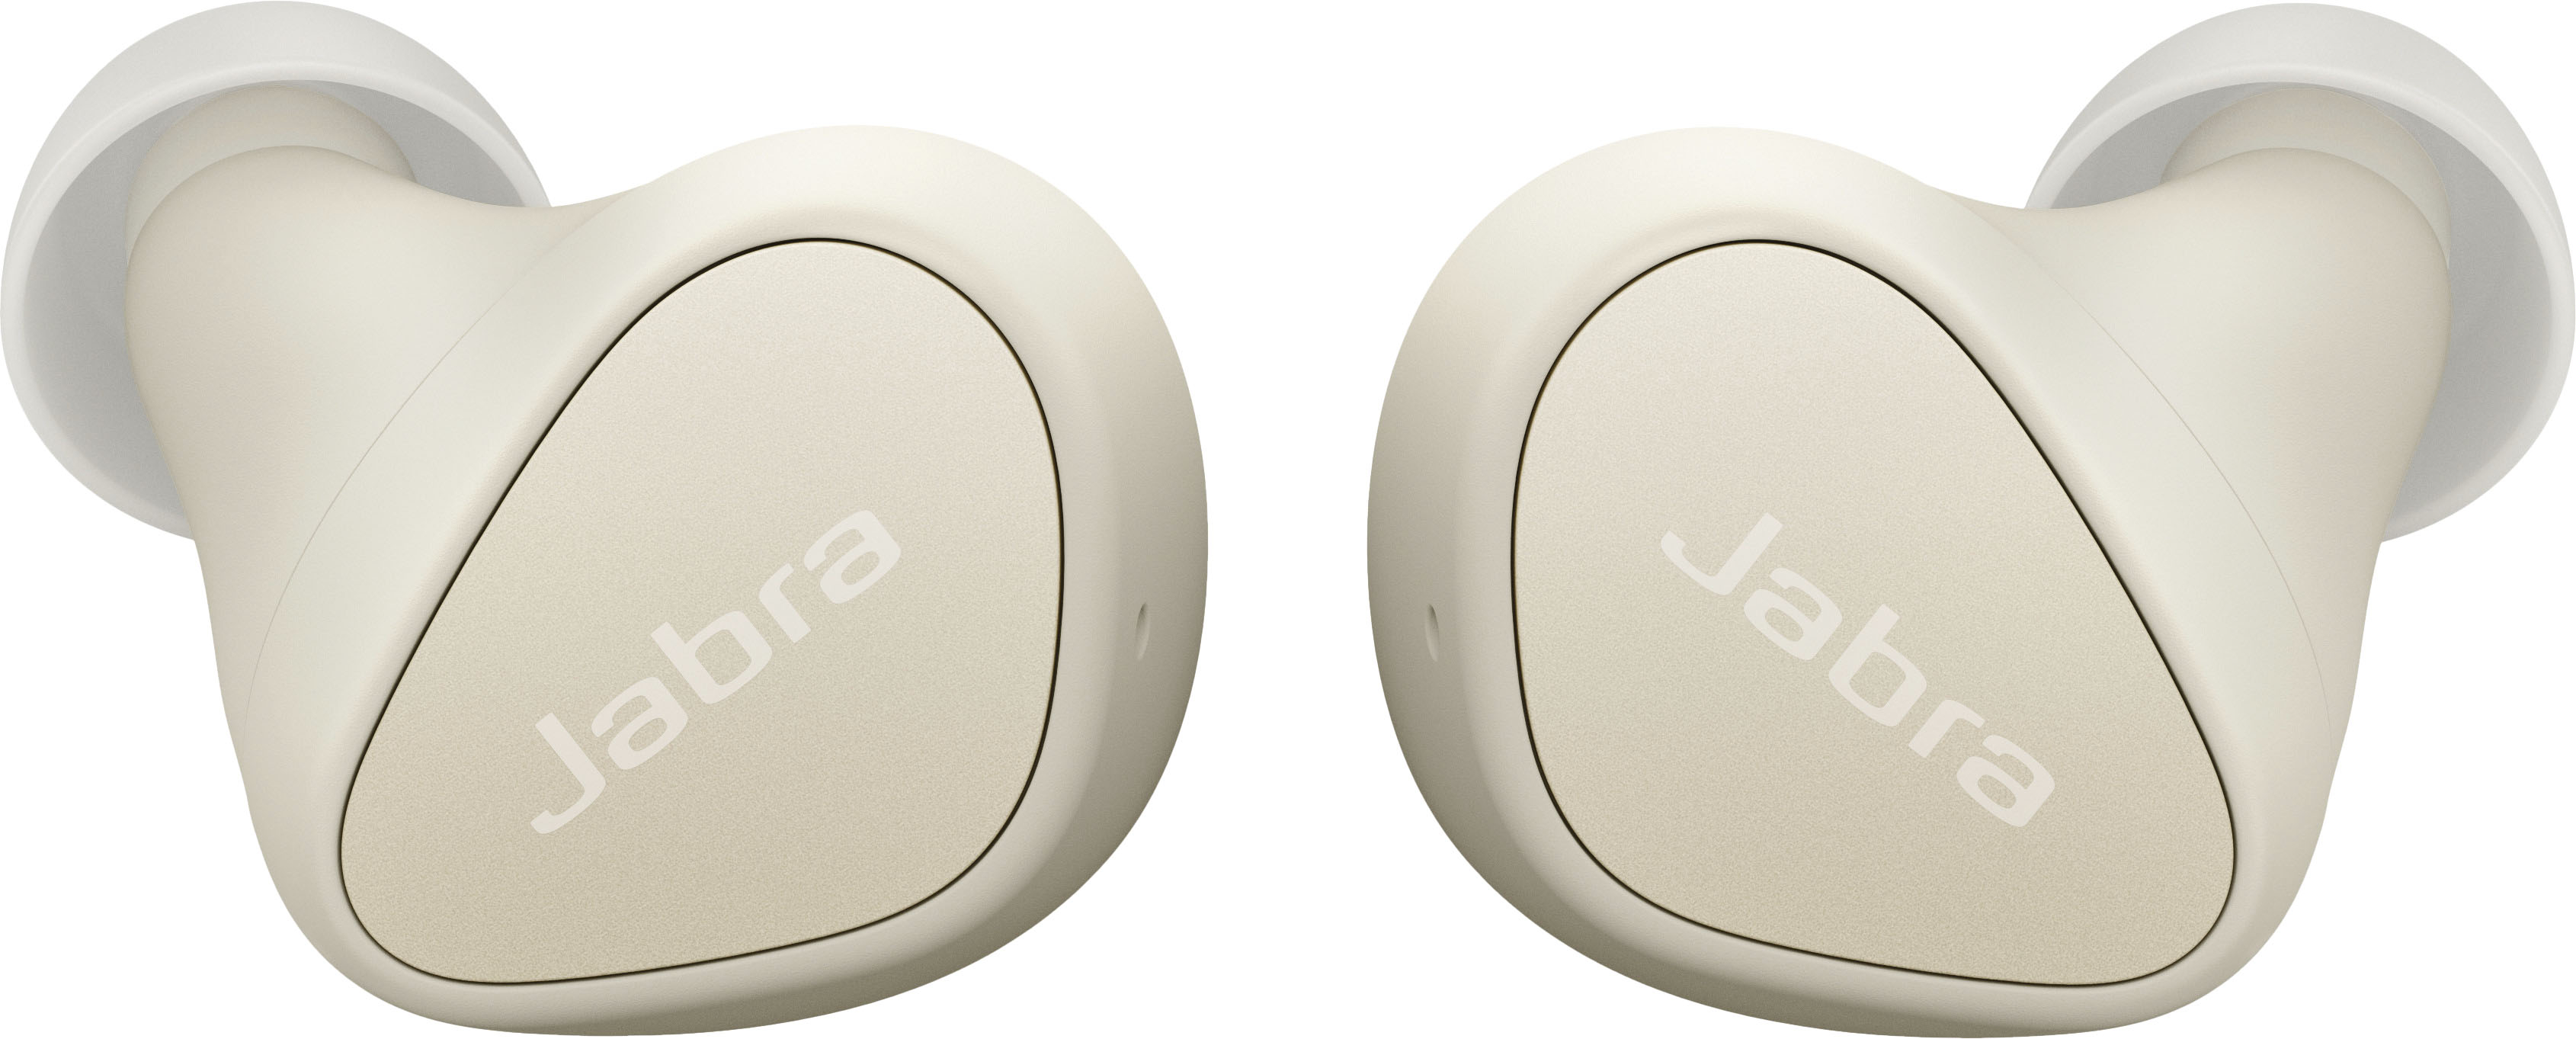 Jabra Elite 3 Review: Premium Feel at an Affordable Price